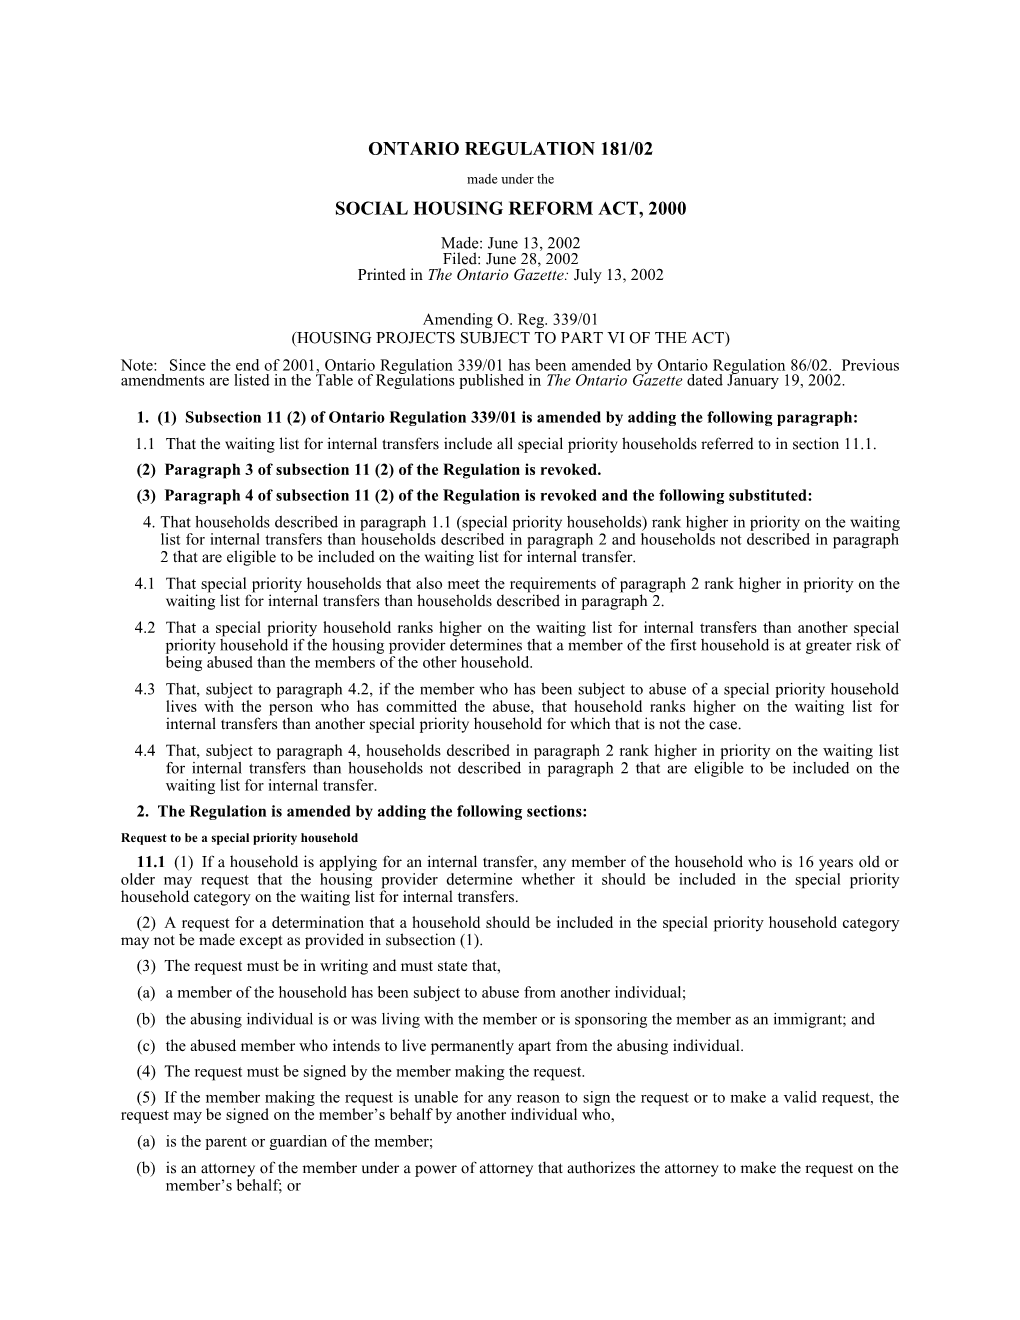 SOCIAL HOUSING REFORM ACT, 2000 - O. Reg. 181/02